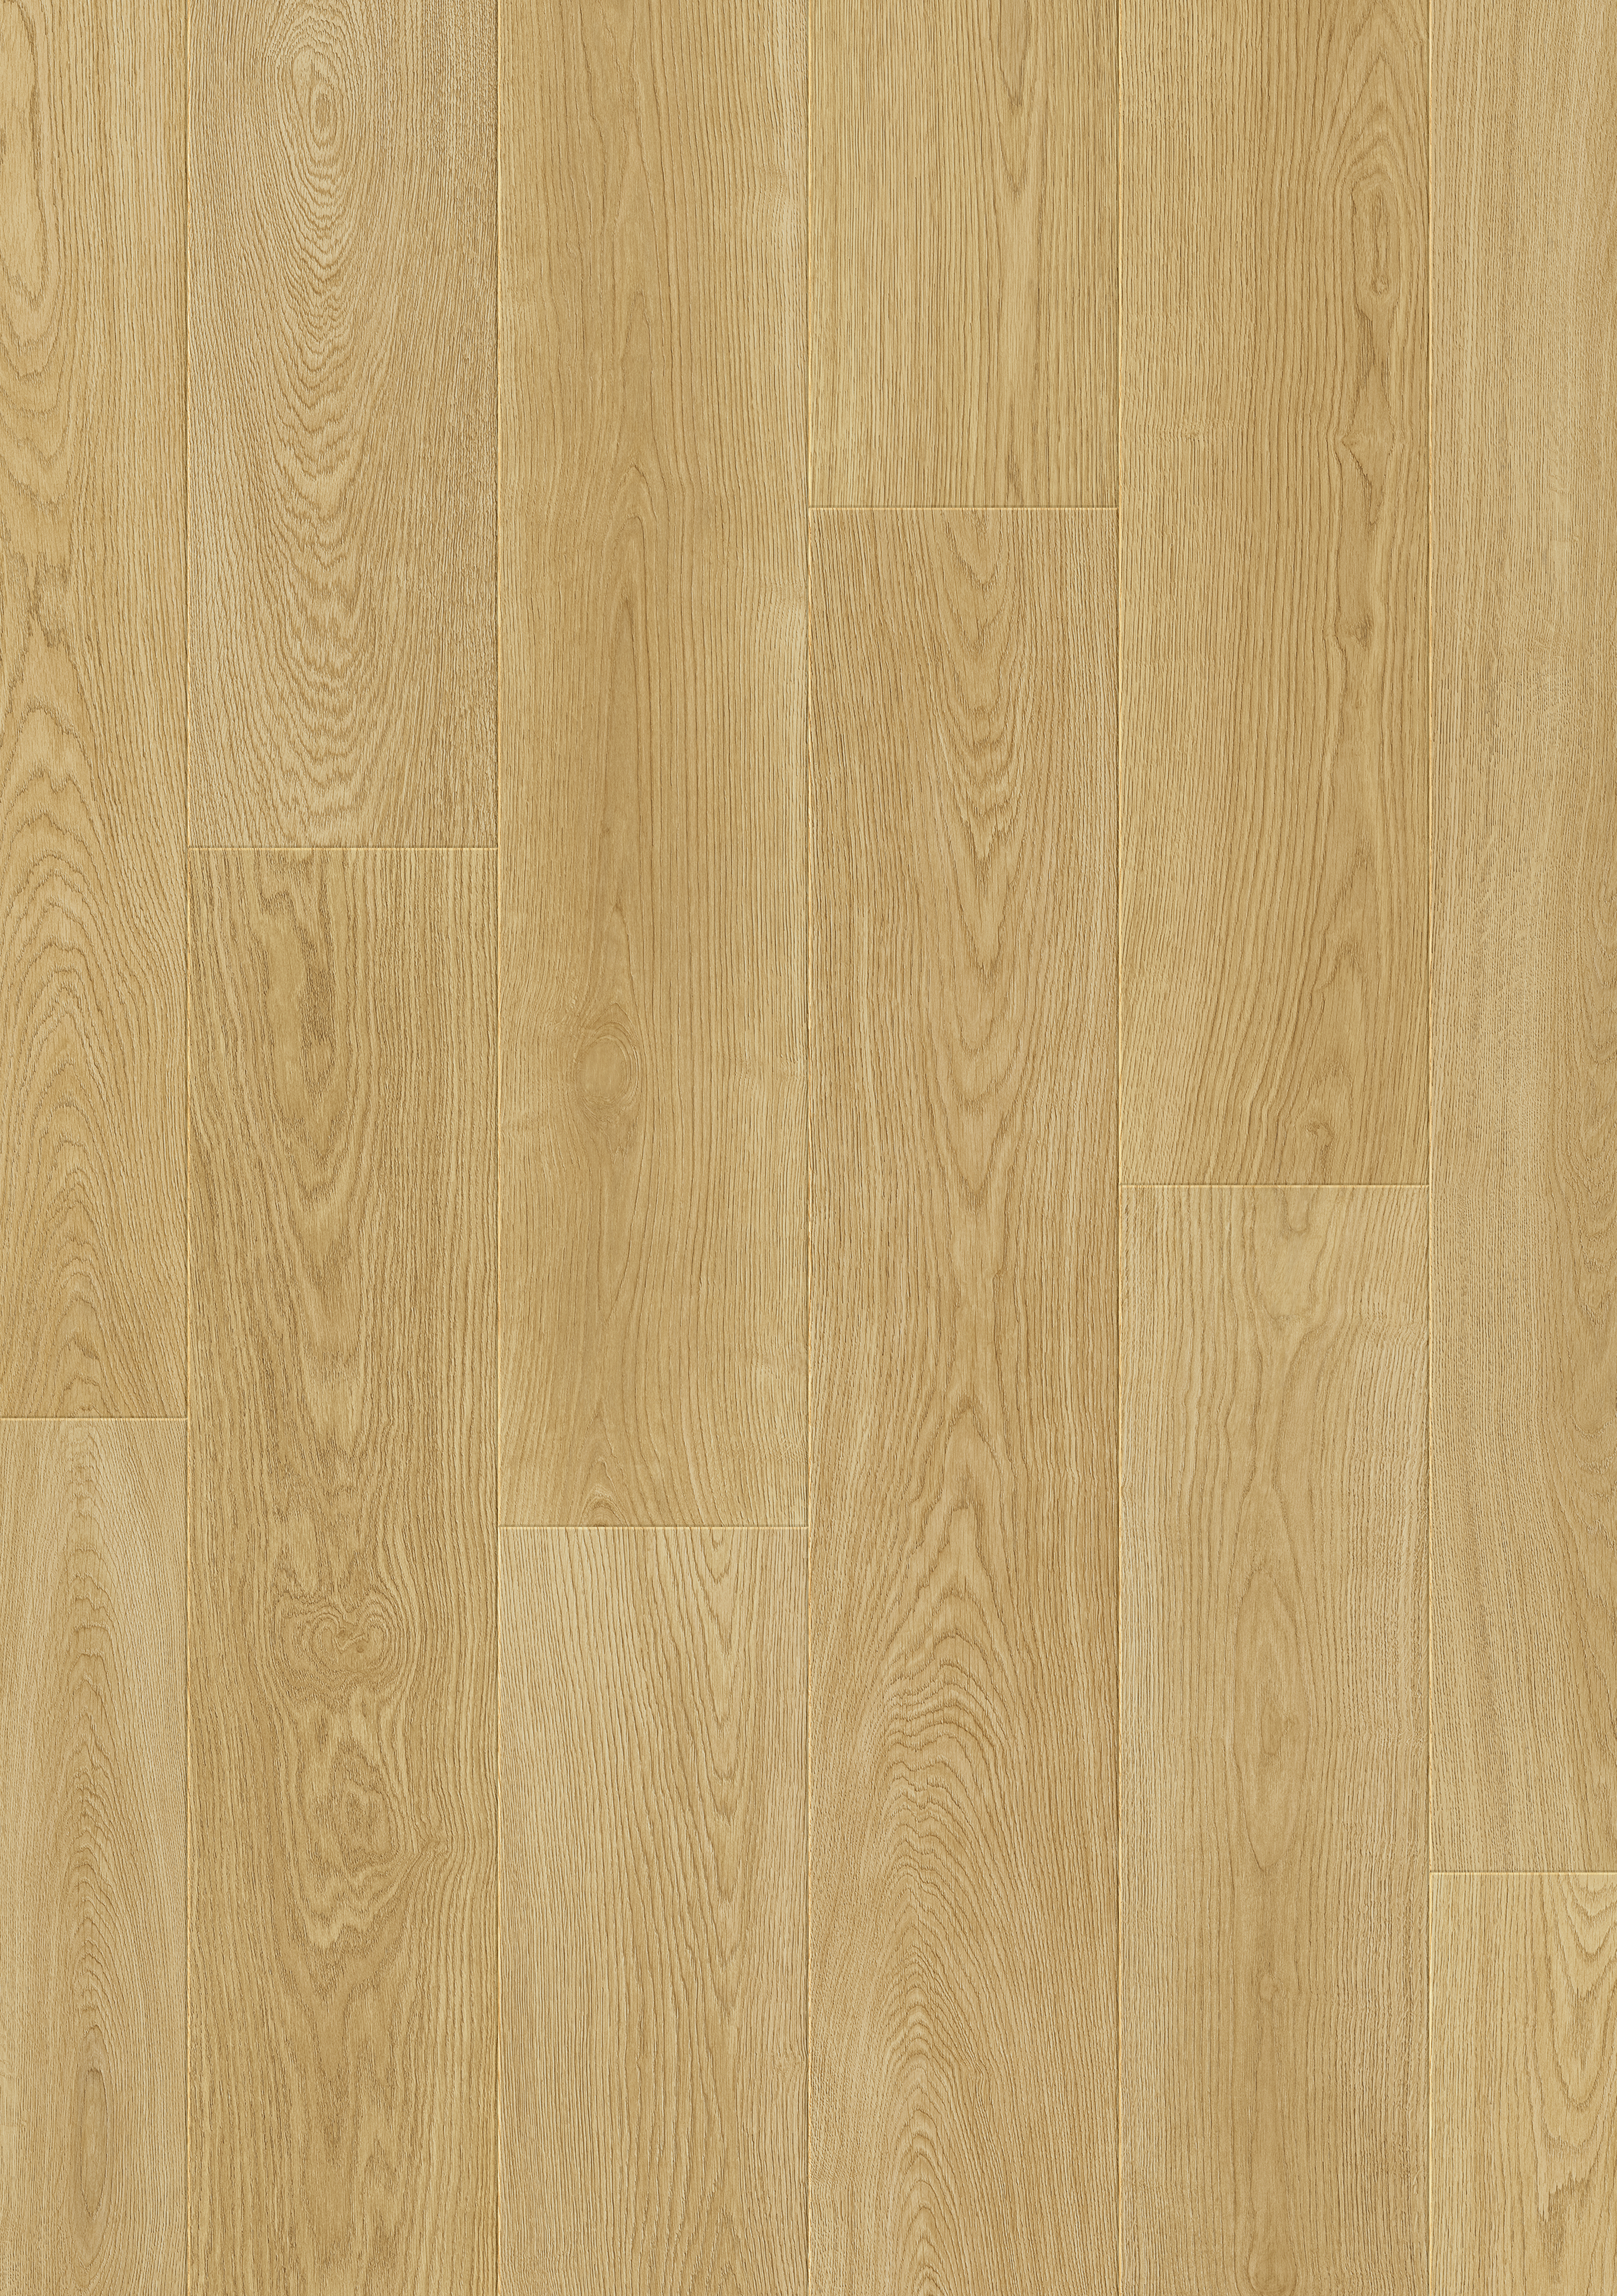 Image of Quick-Step Salto Pure Natural Oak 8mm Water Resistant Laminate Flooring - 2.179m2